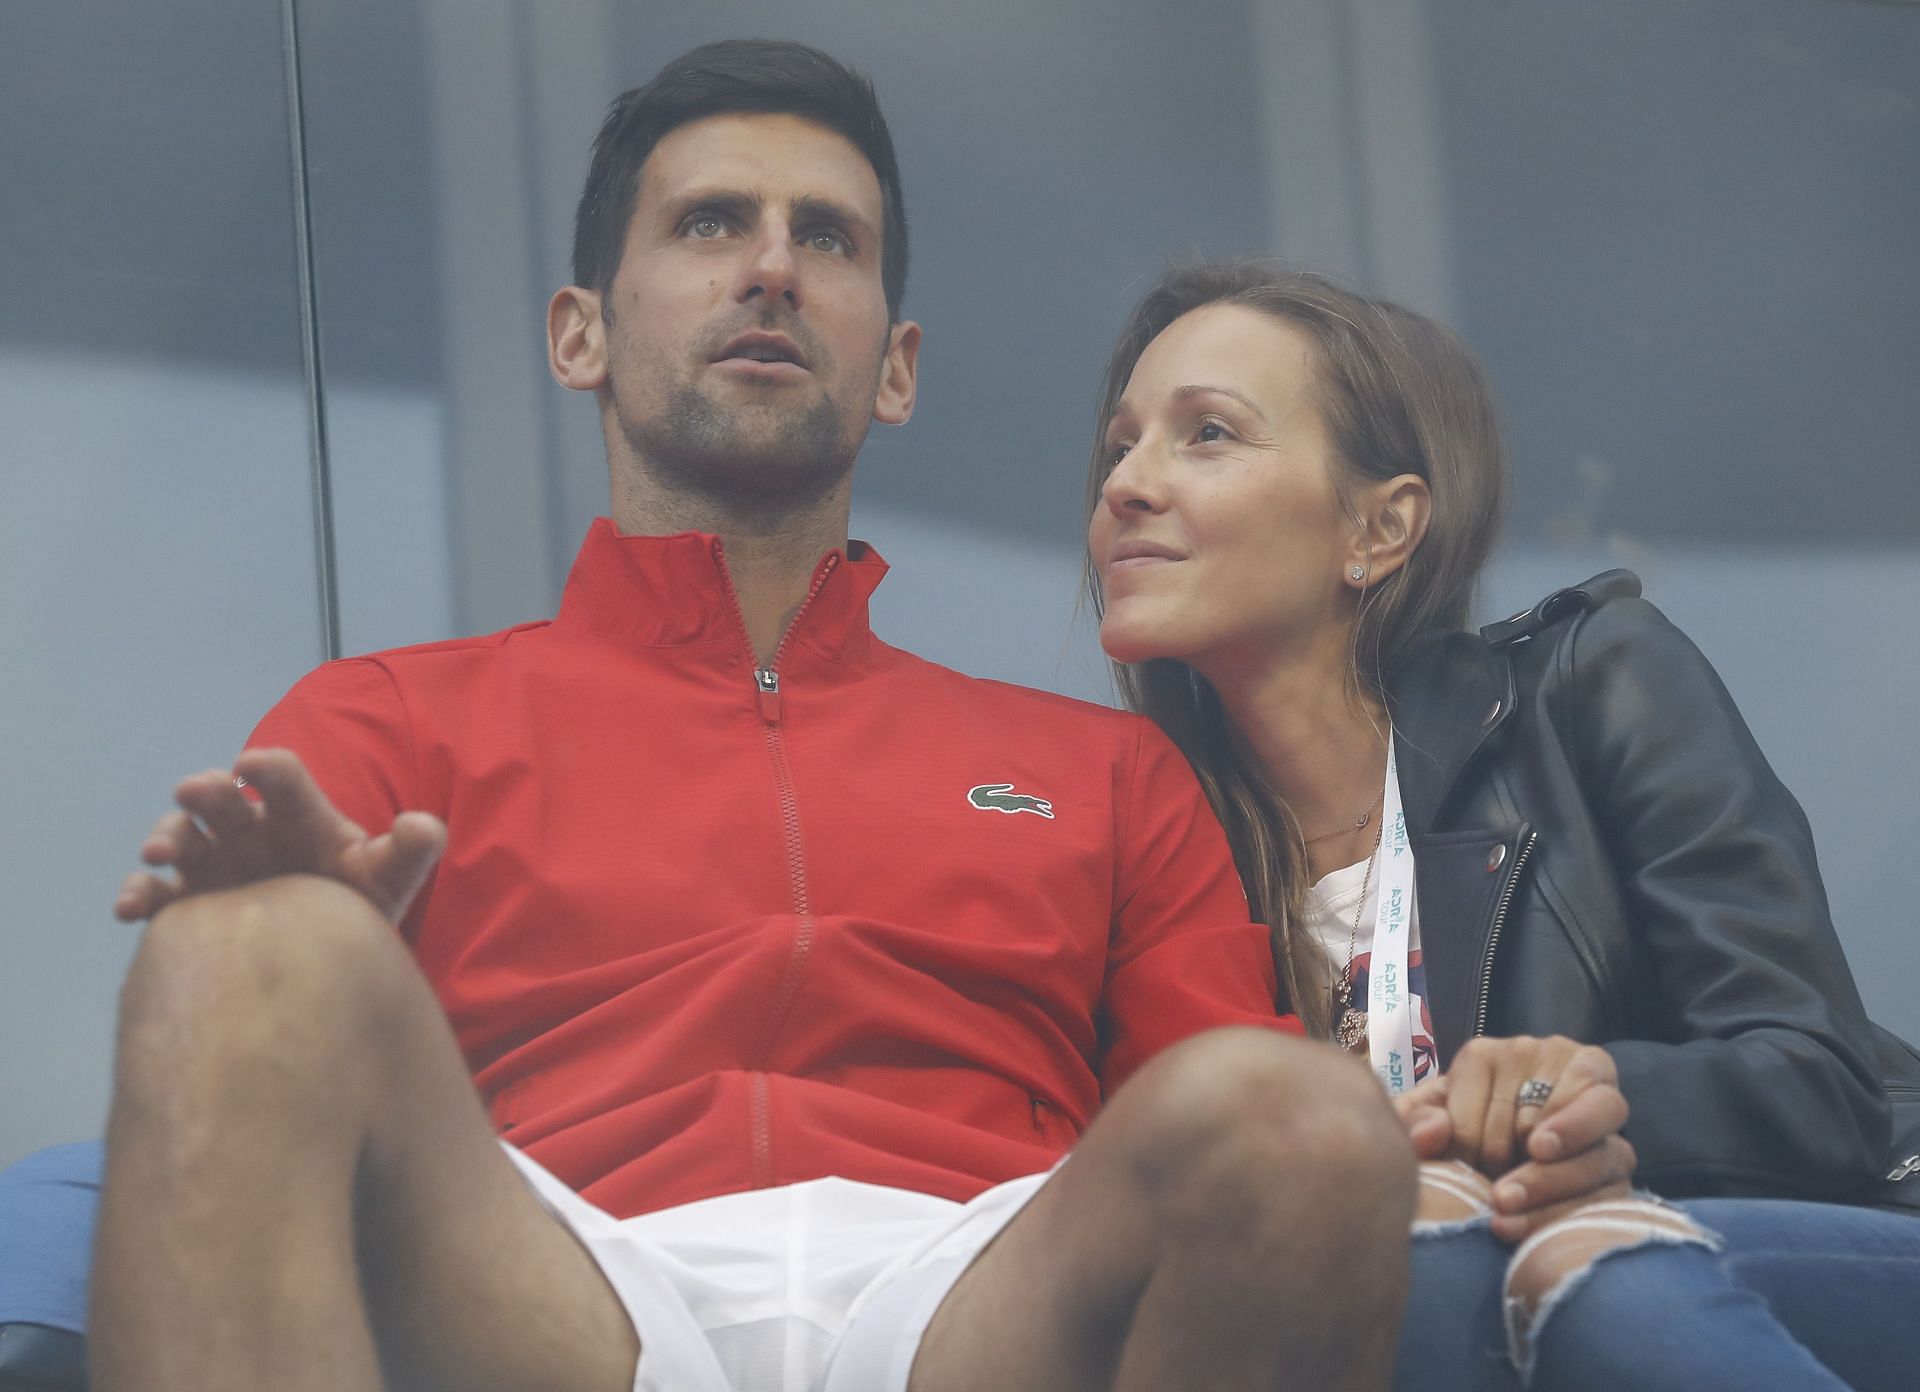 Novak Djokovic and Jelena Djokovic (nee Ristic) met in high school and have been inseparable since then